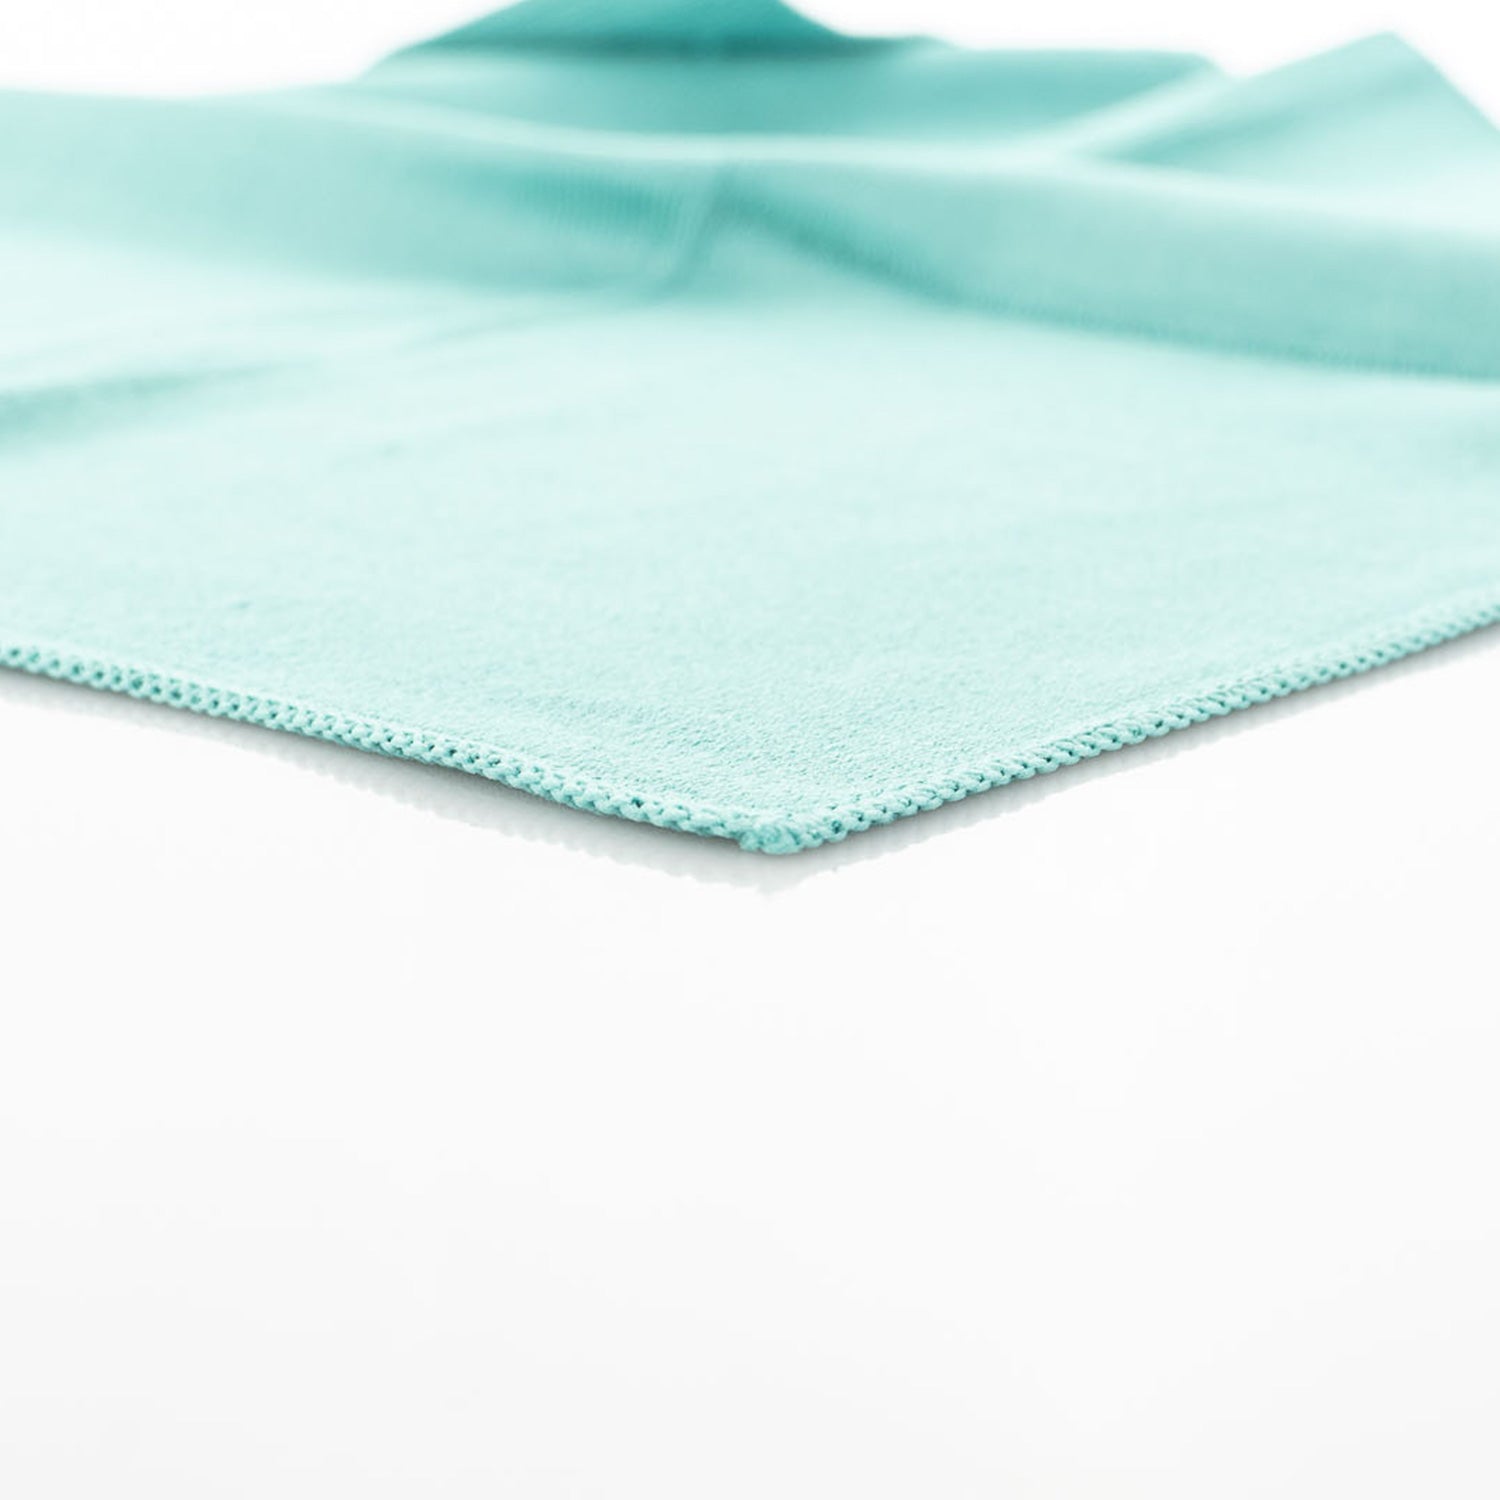 mf2g-dark-green-glass-cleaning-microfiber-towel-close-up